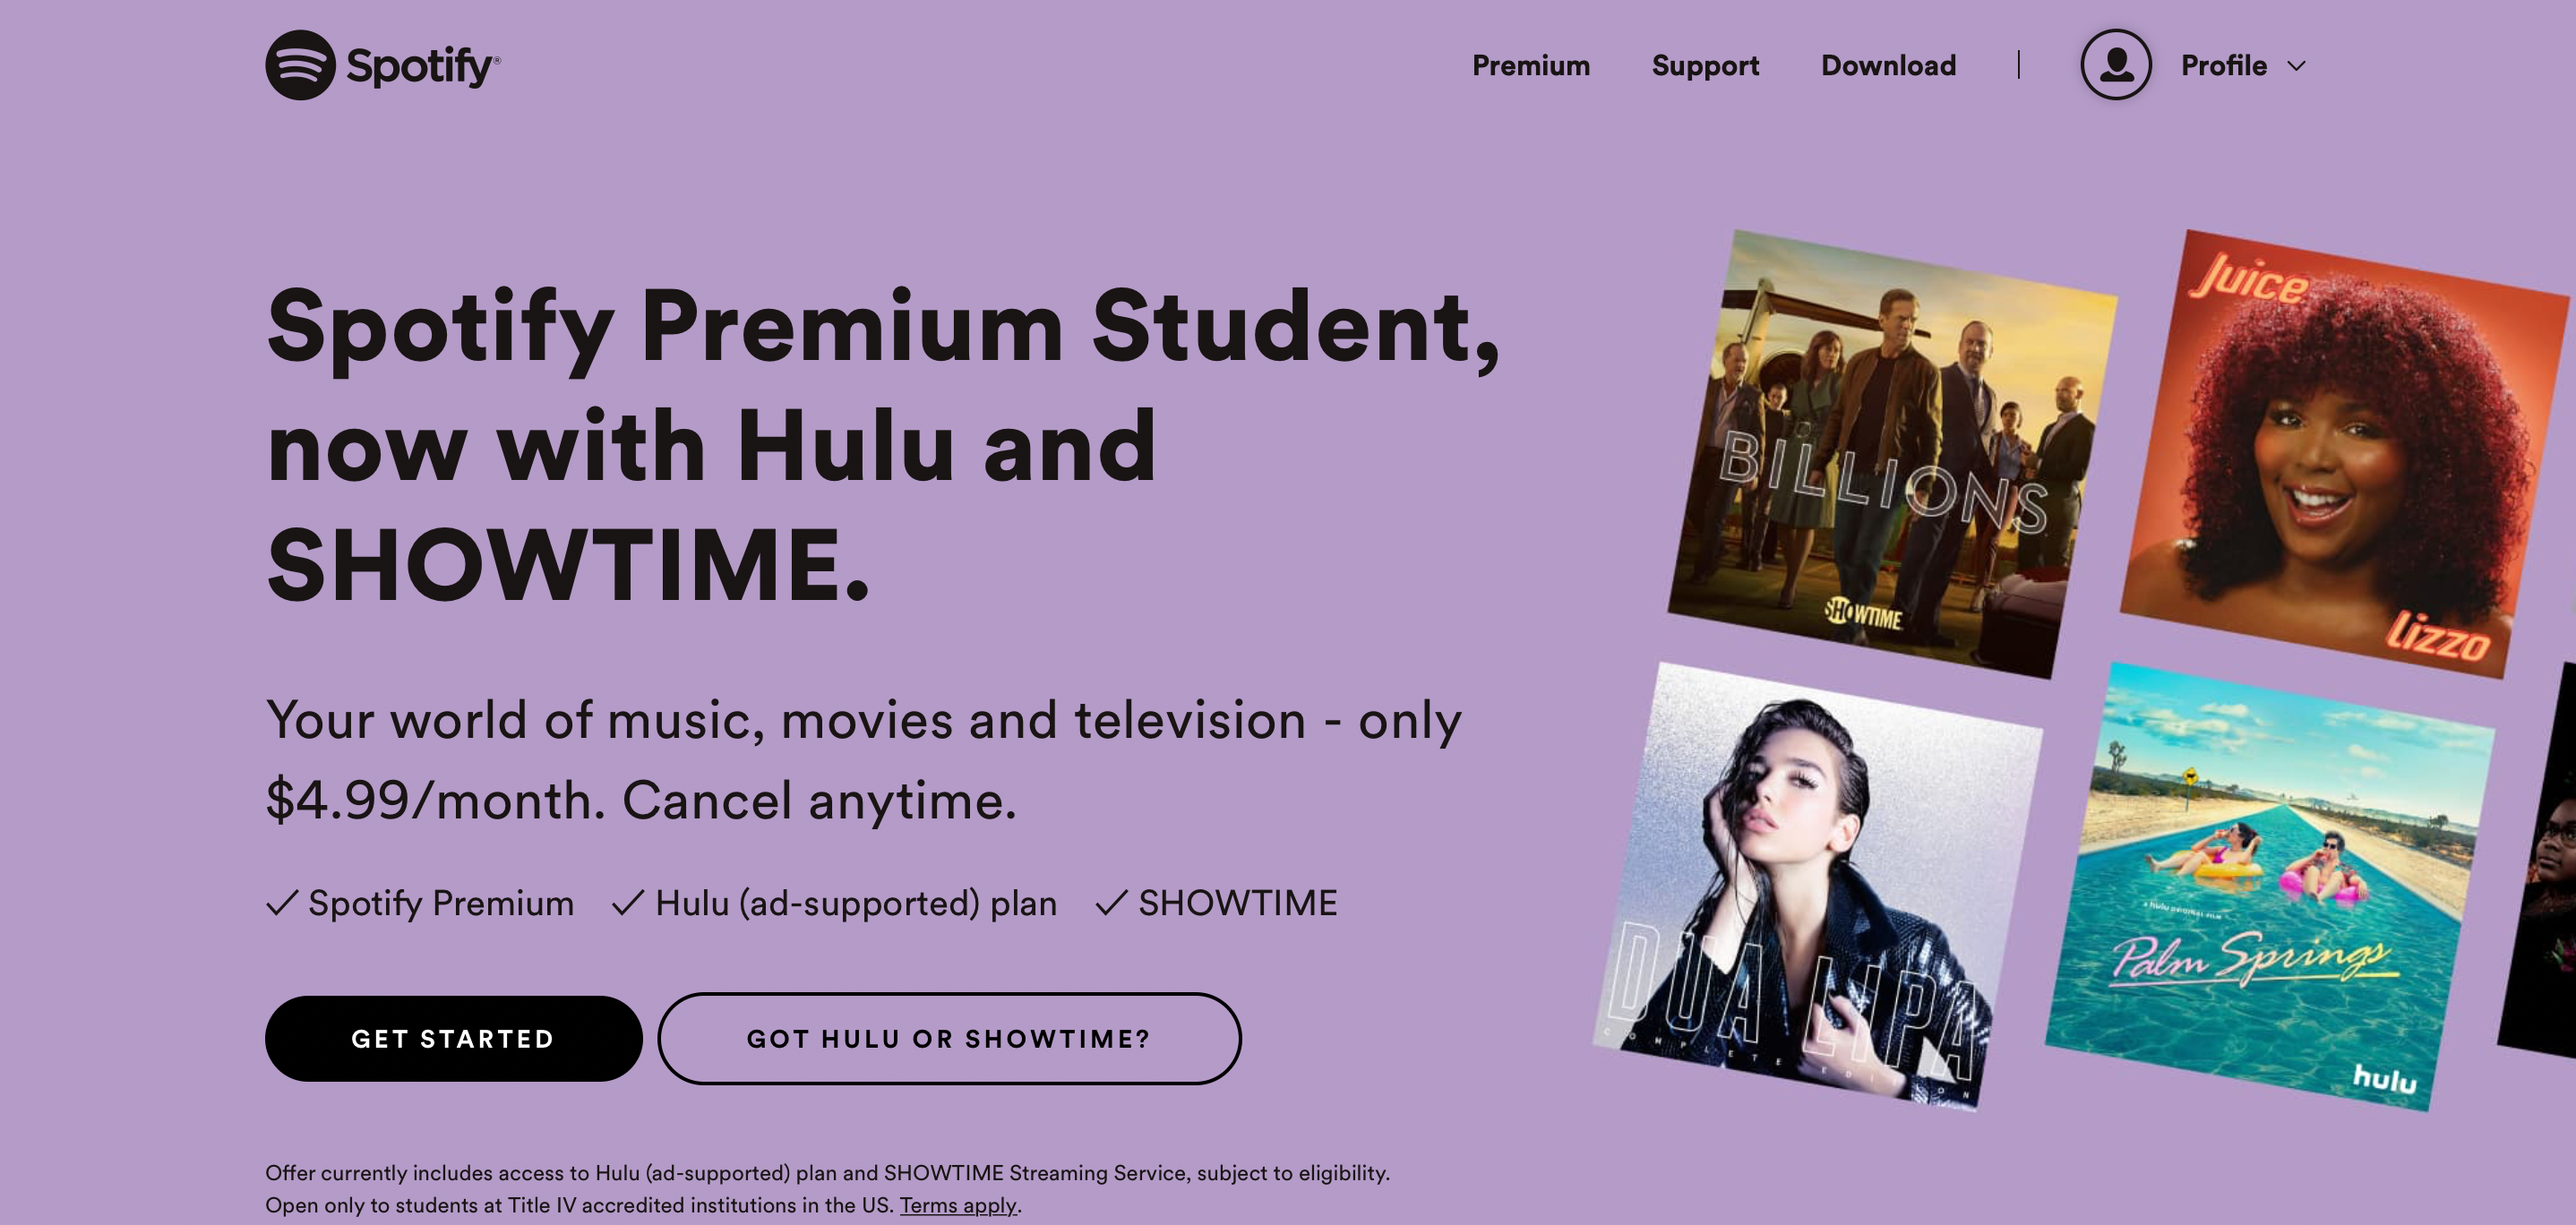 Spotify Premium Student Homepage